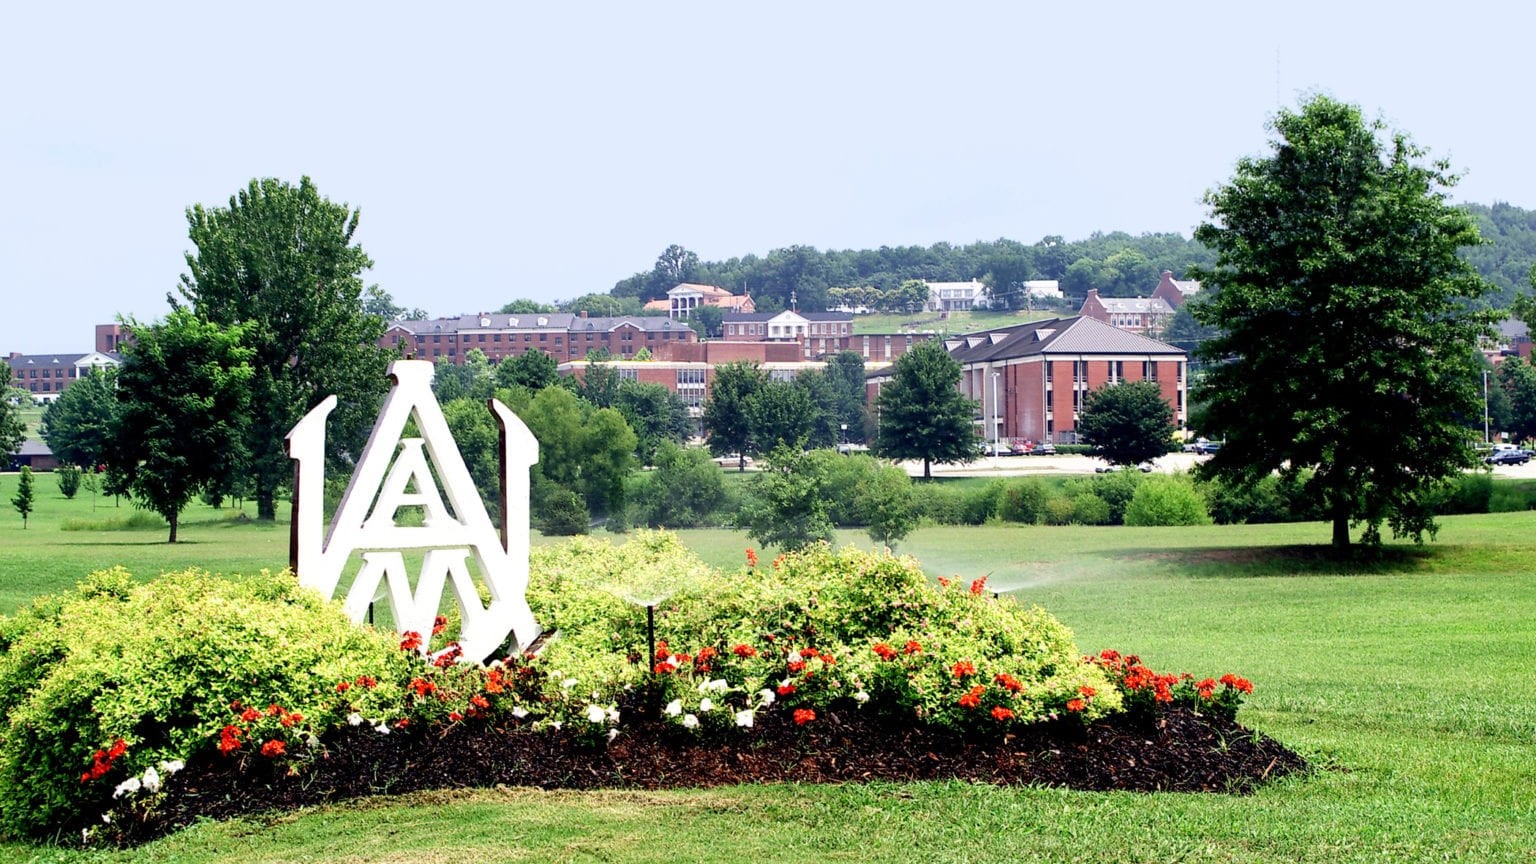 Alabama A&M University grounds